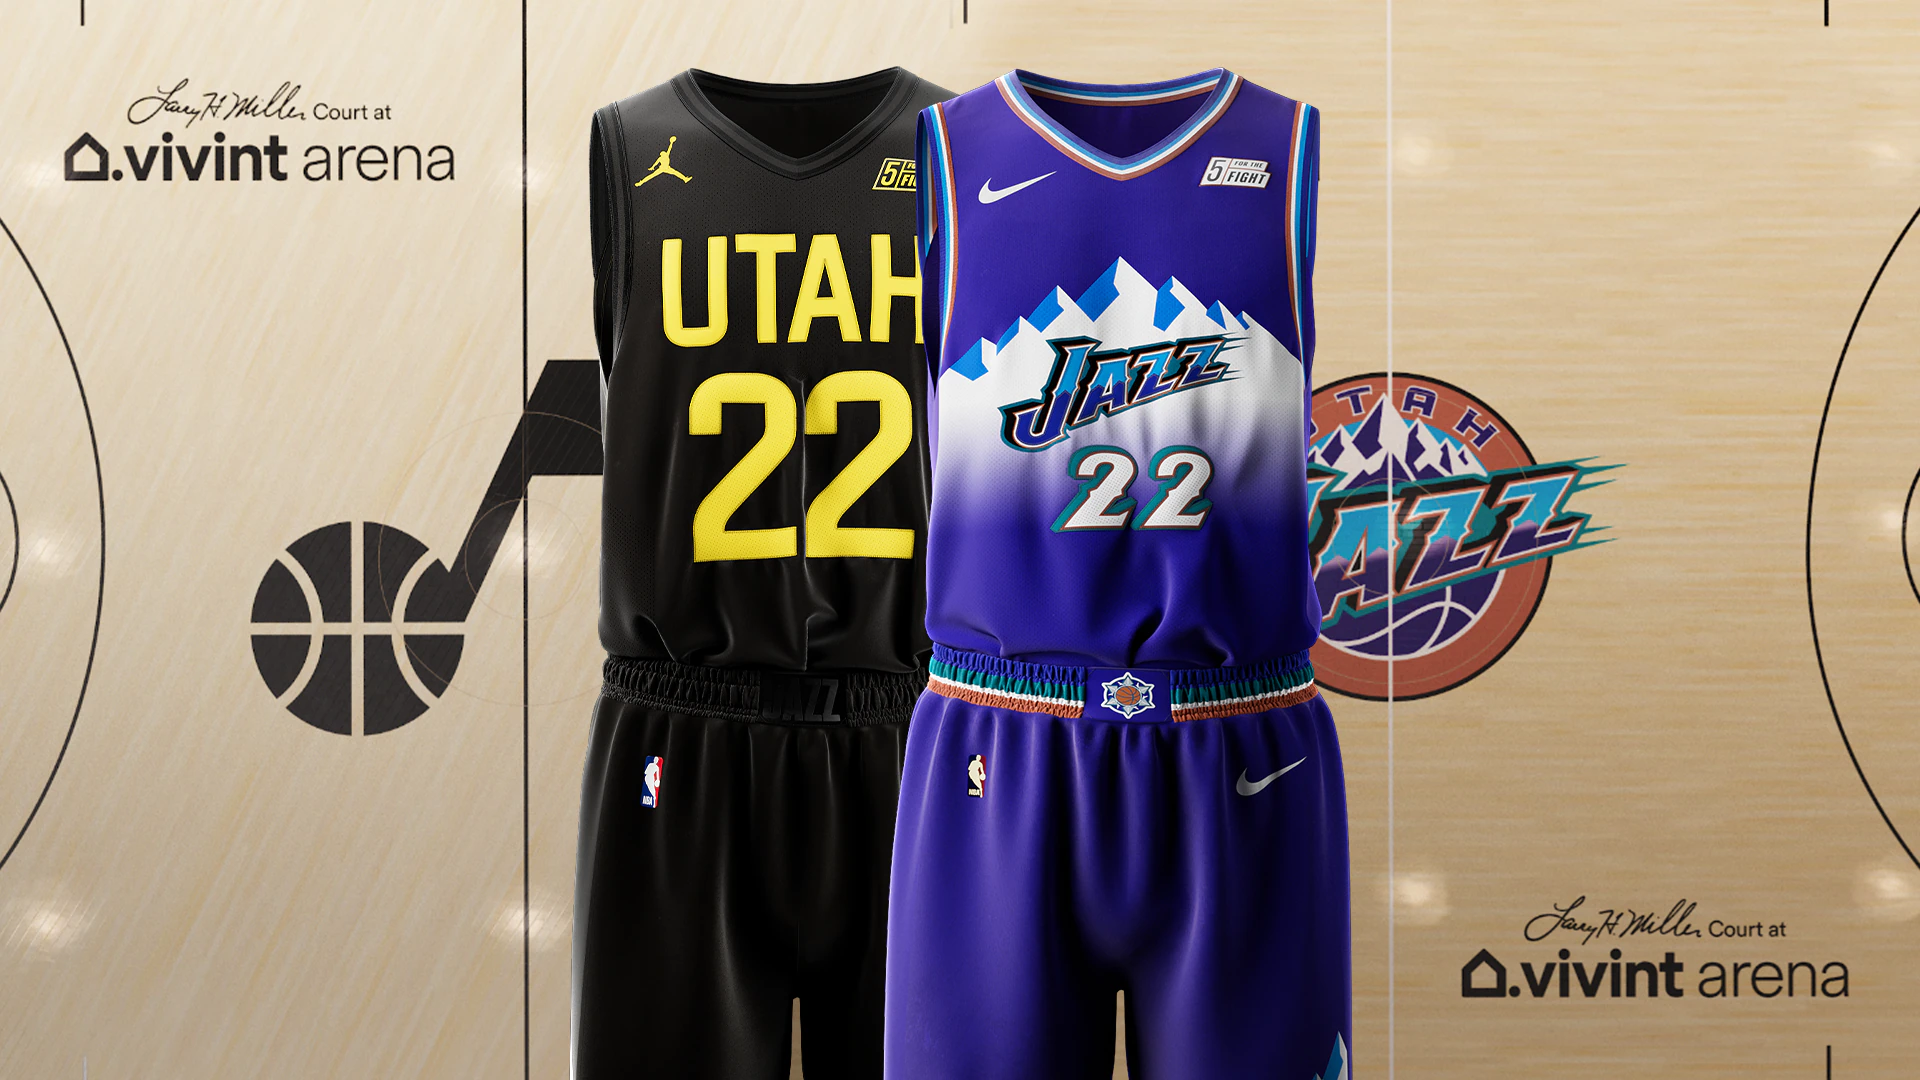 Utah Jazz release new rebranded jerseys - TownLift, Park City News